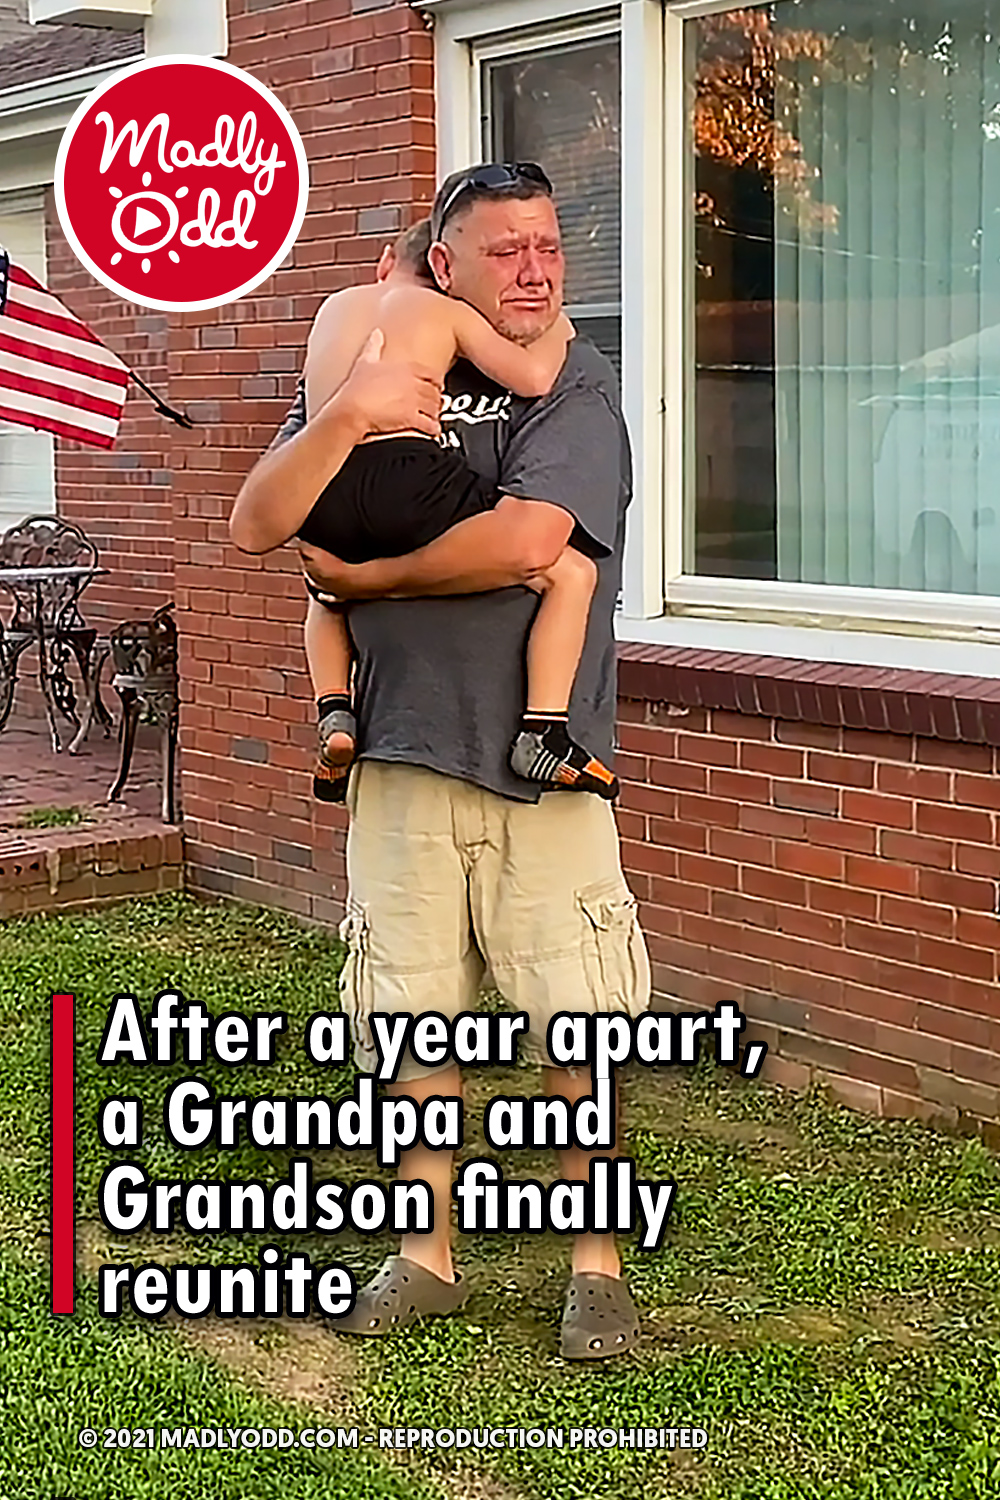 After a year apart, a Grandpa and Grandson finally reunite